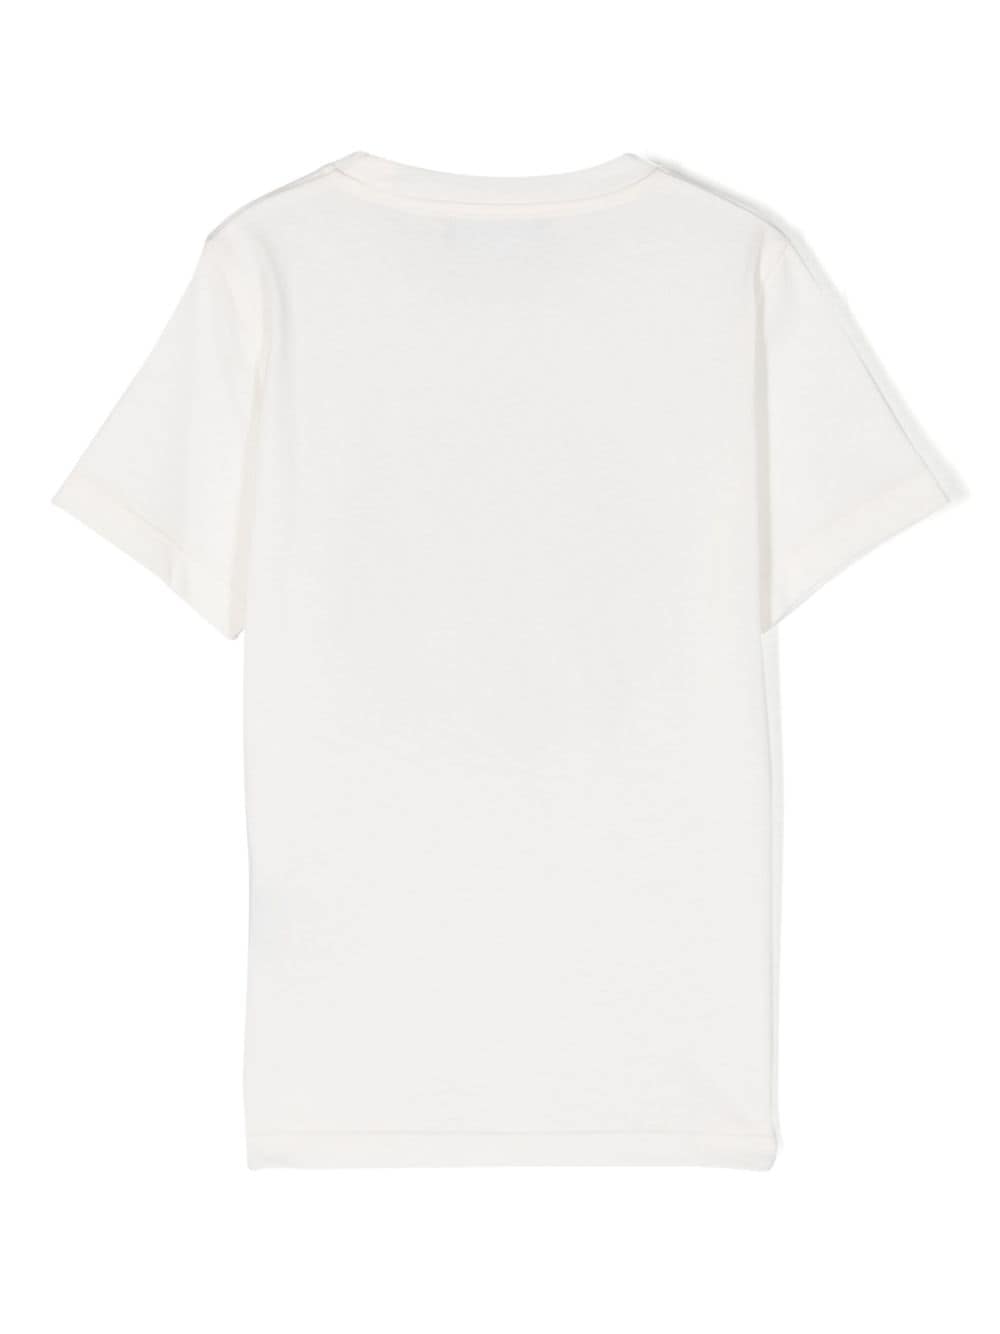 Cotton T-shirt with Medusa Head print